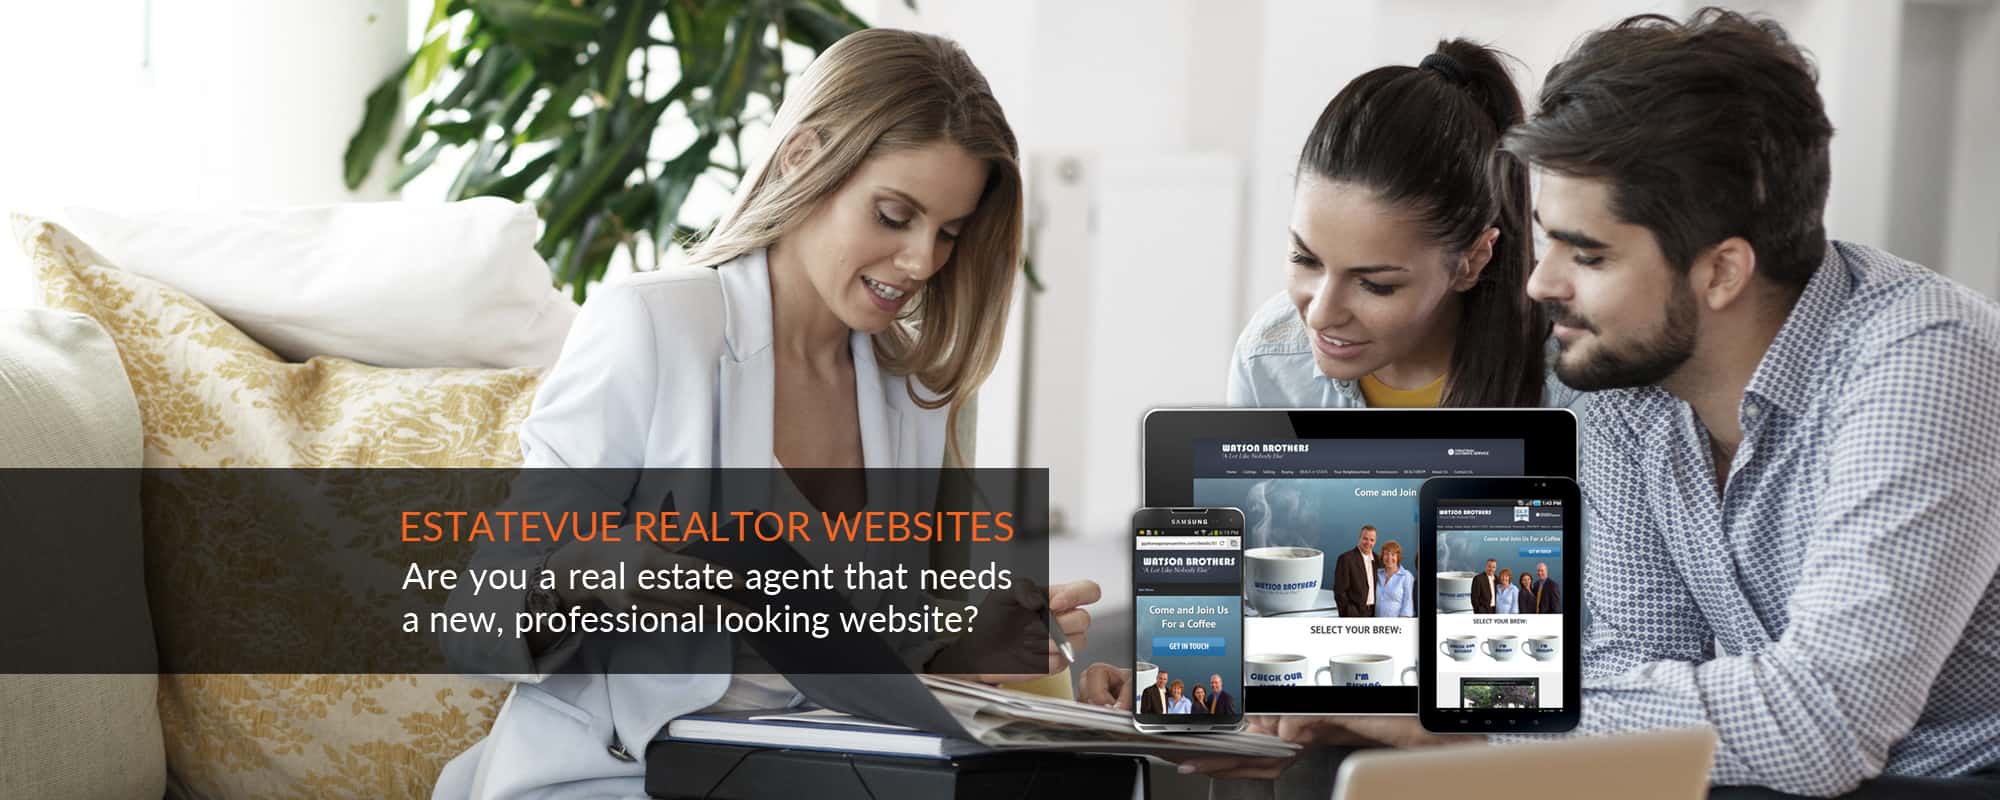 realtor websites,websites for realtors,realtor sites